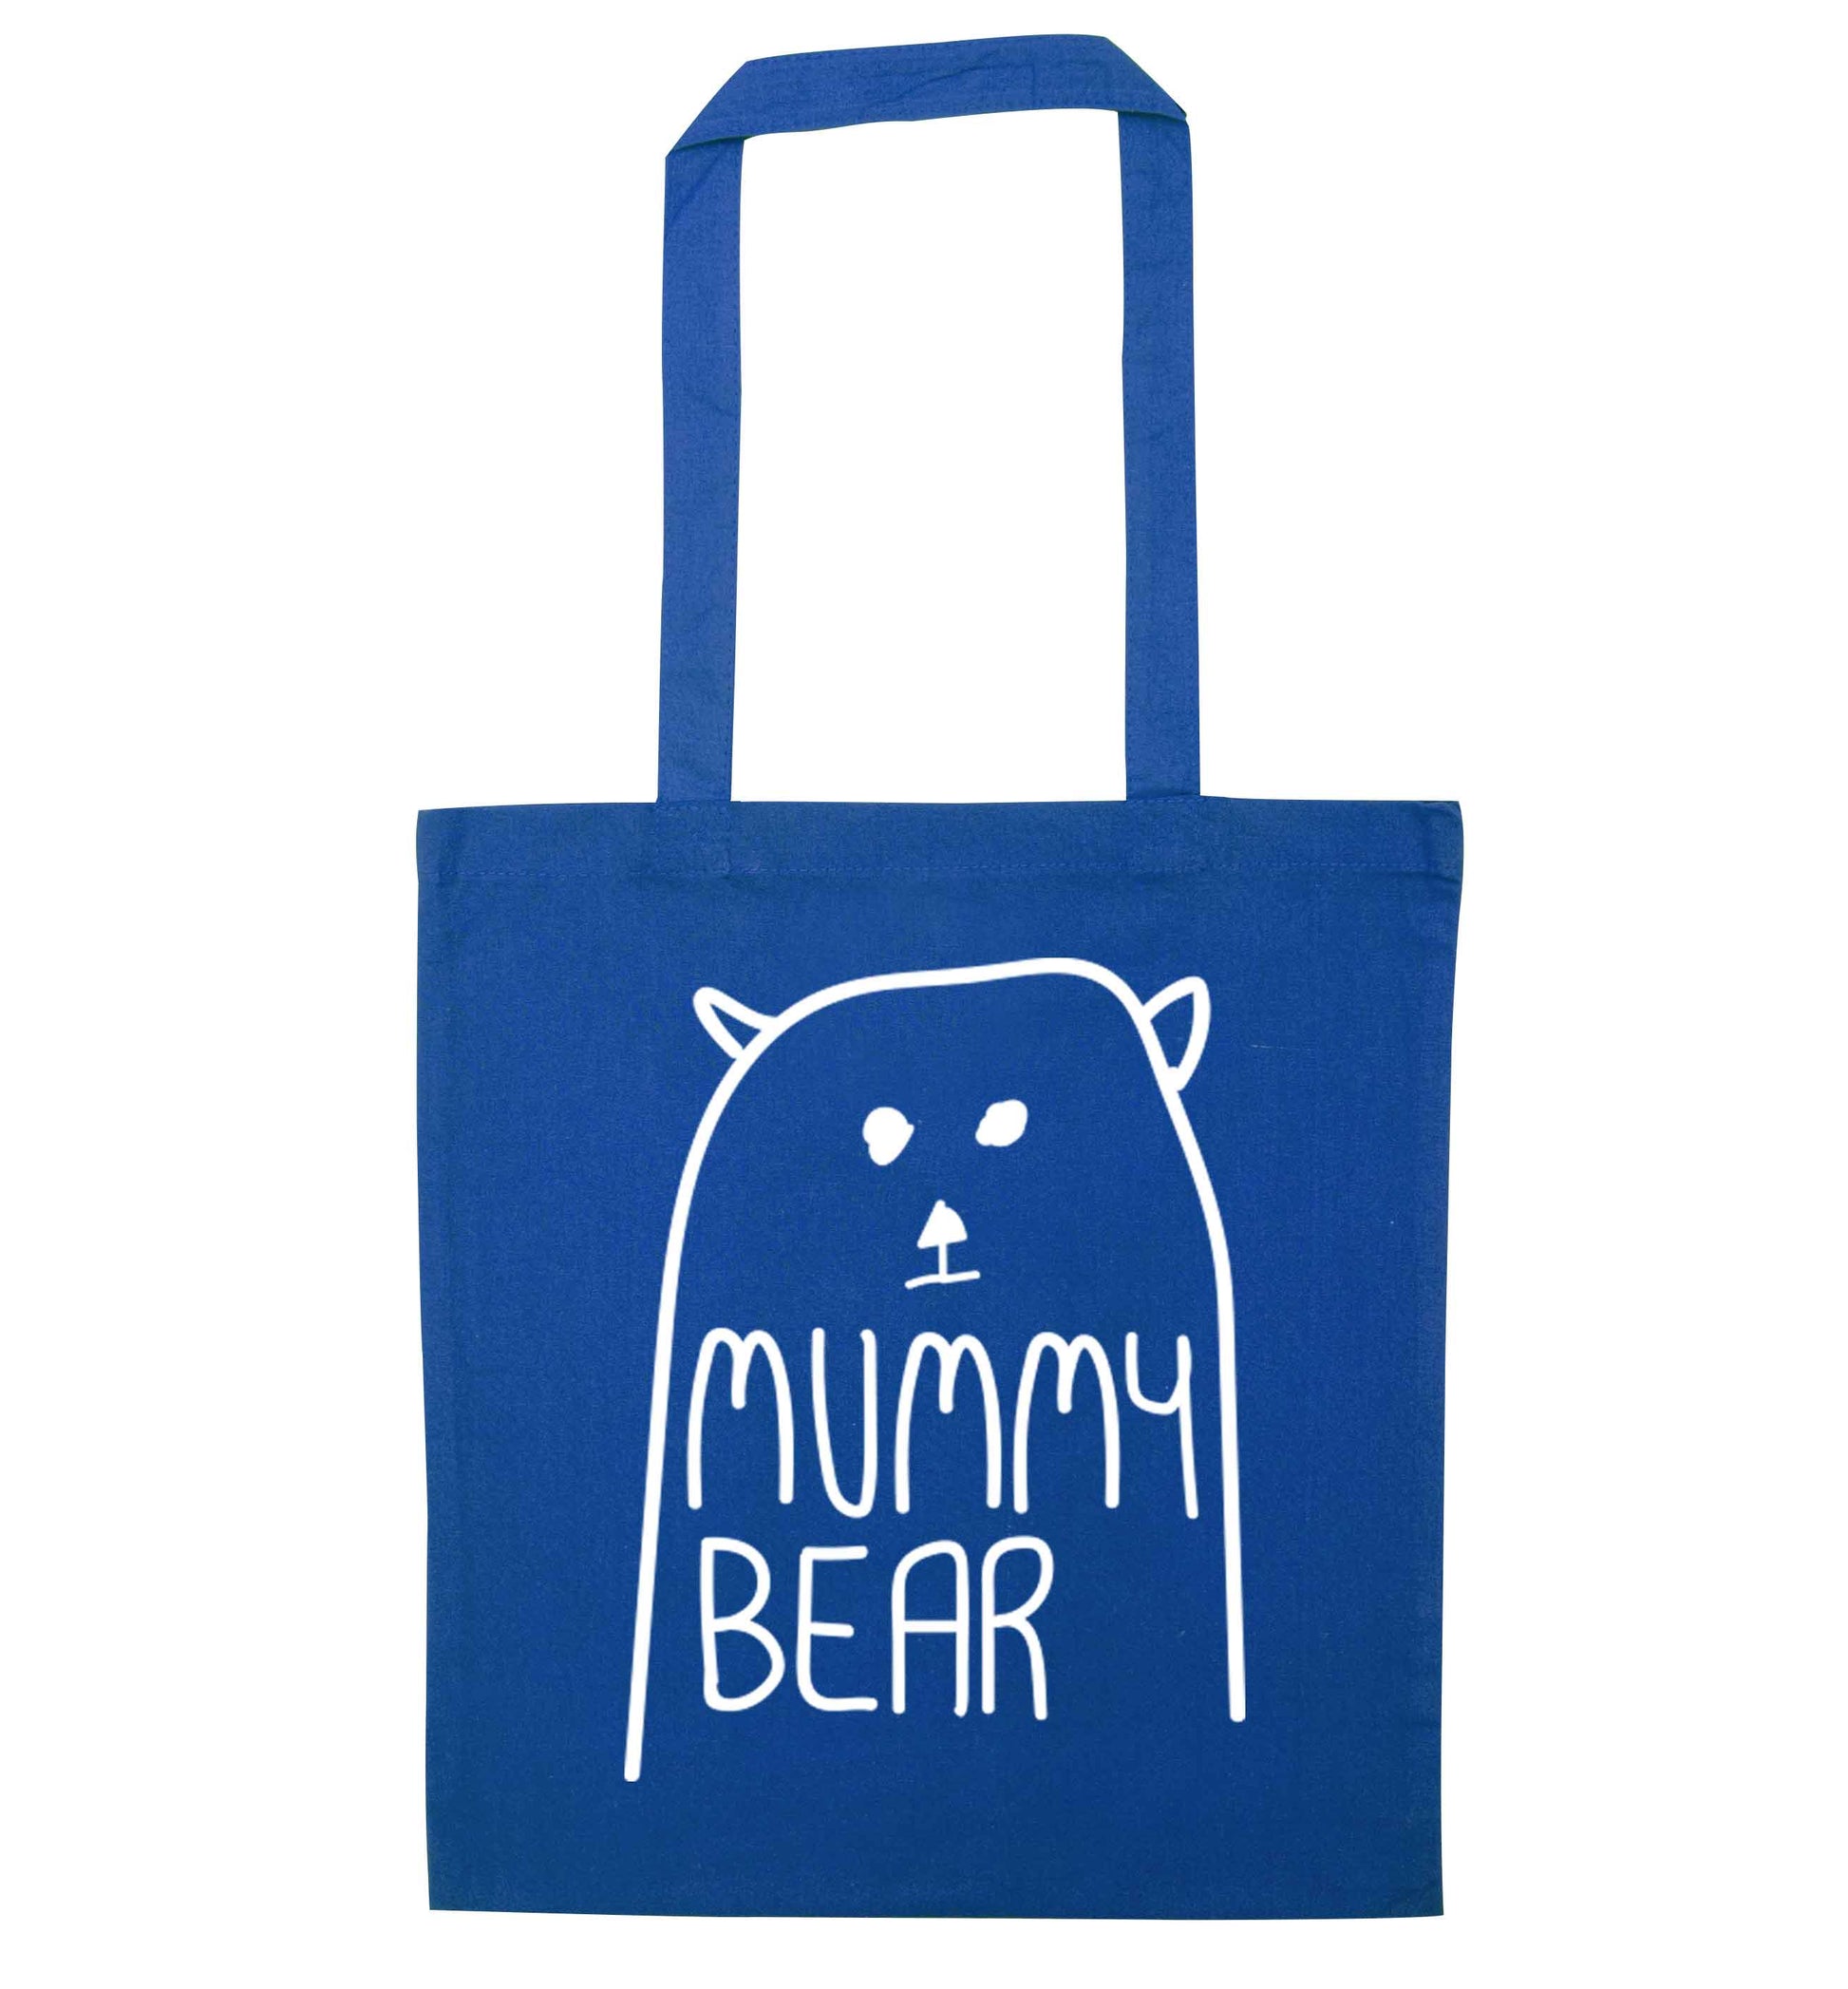 Mummy bear blue tote bag